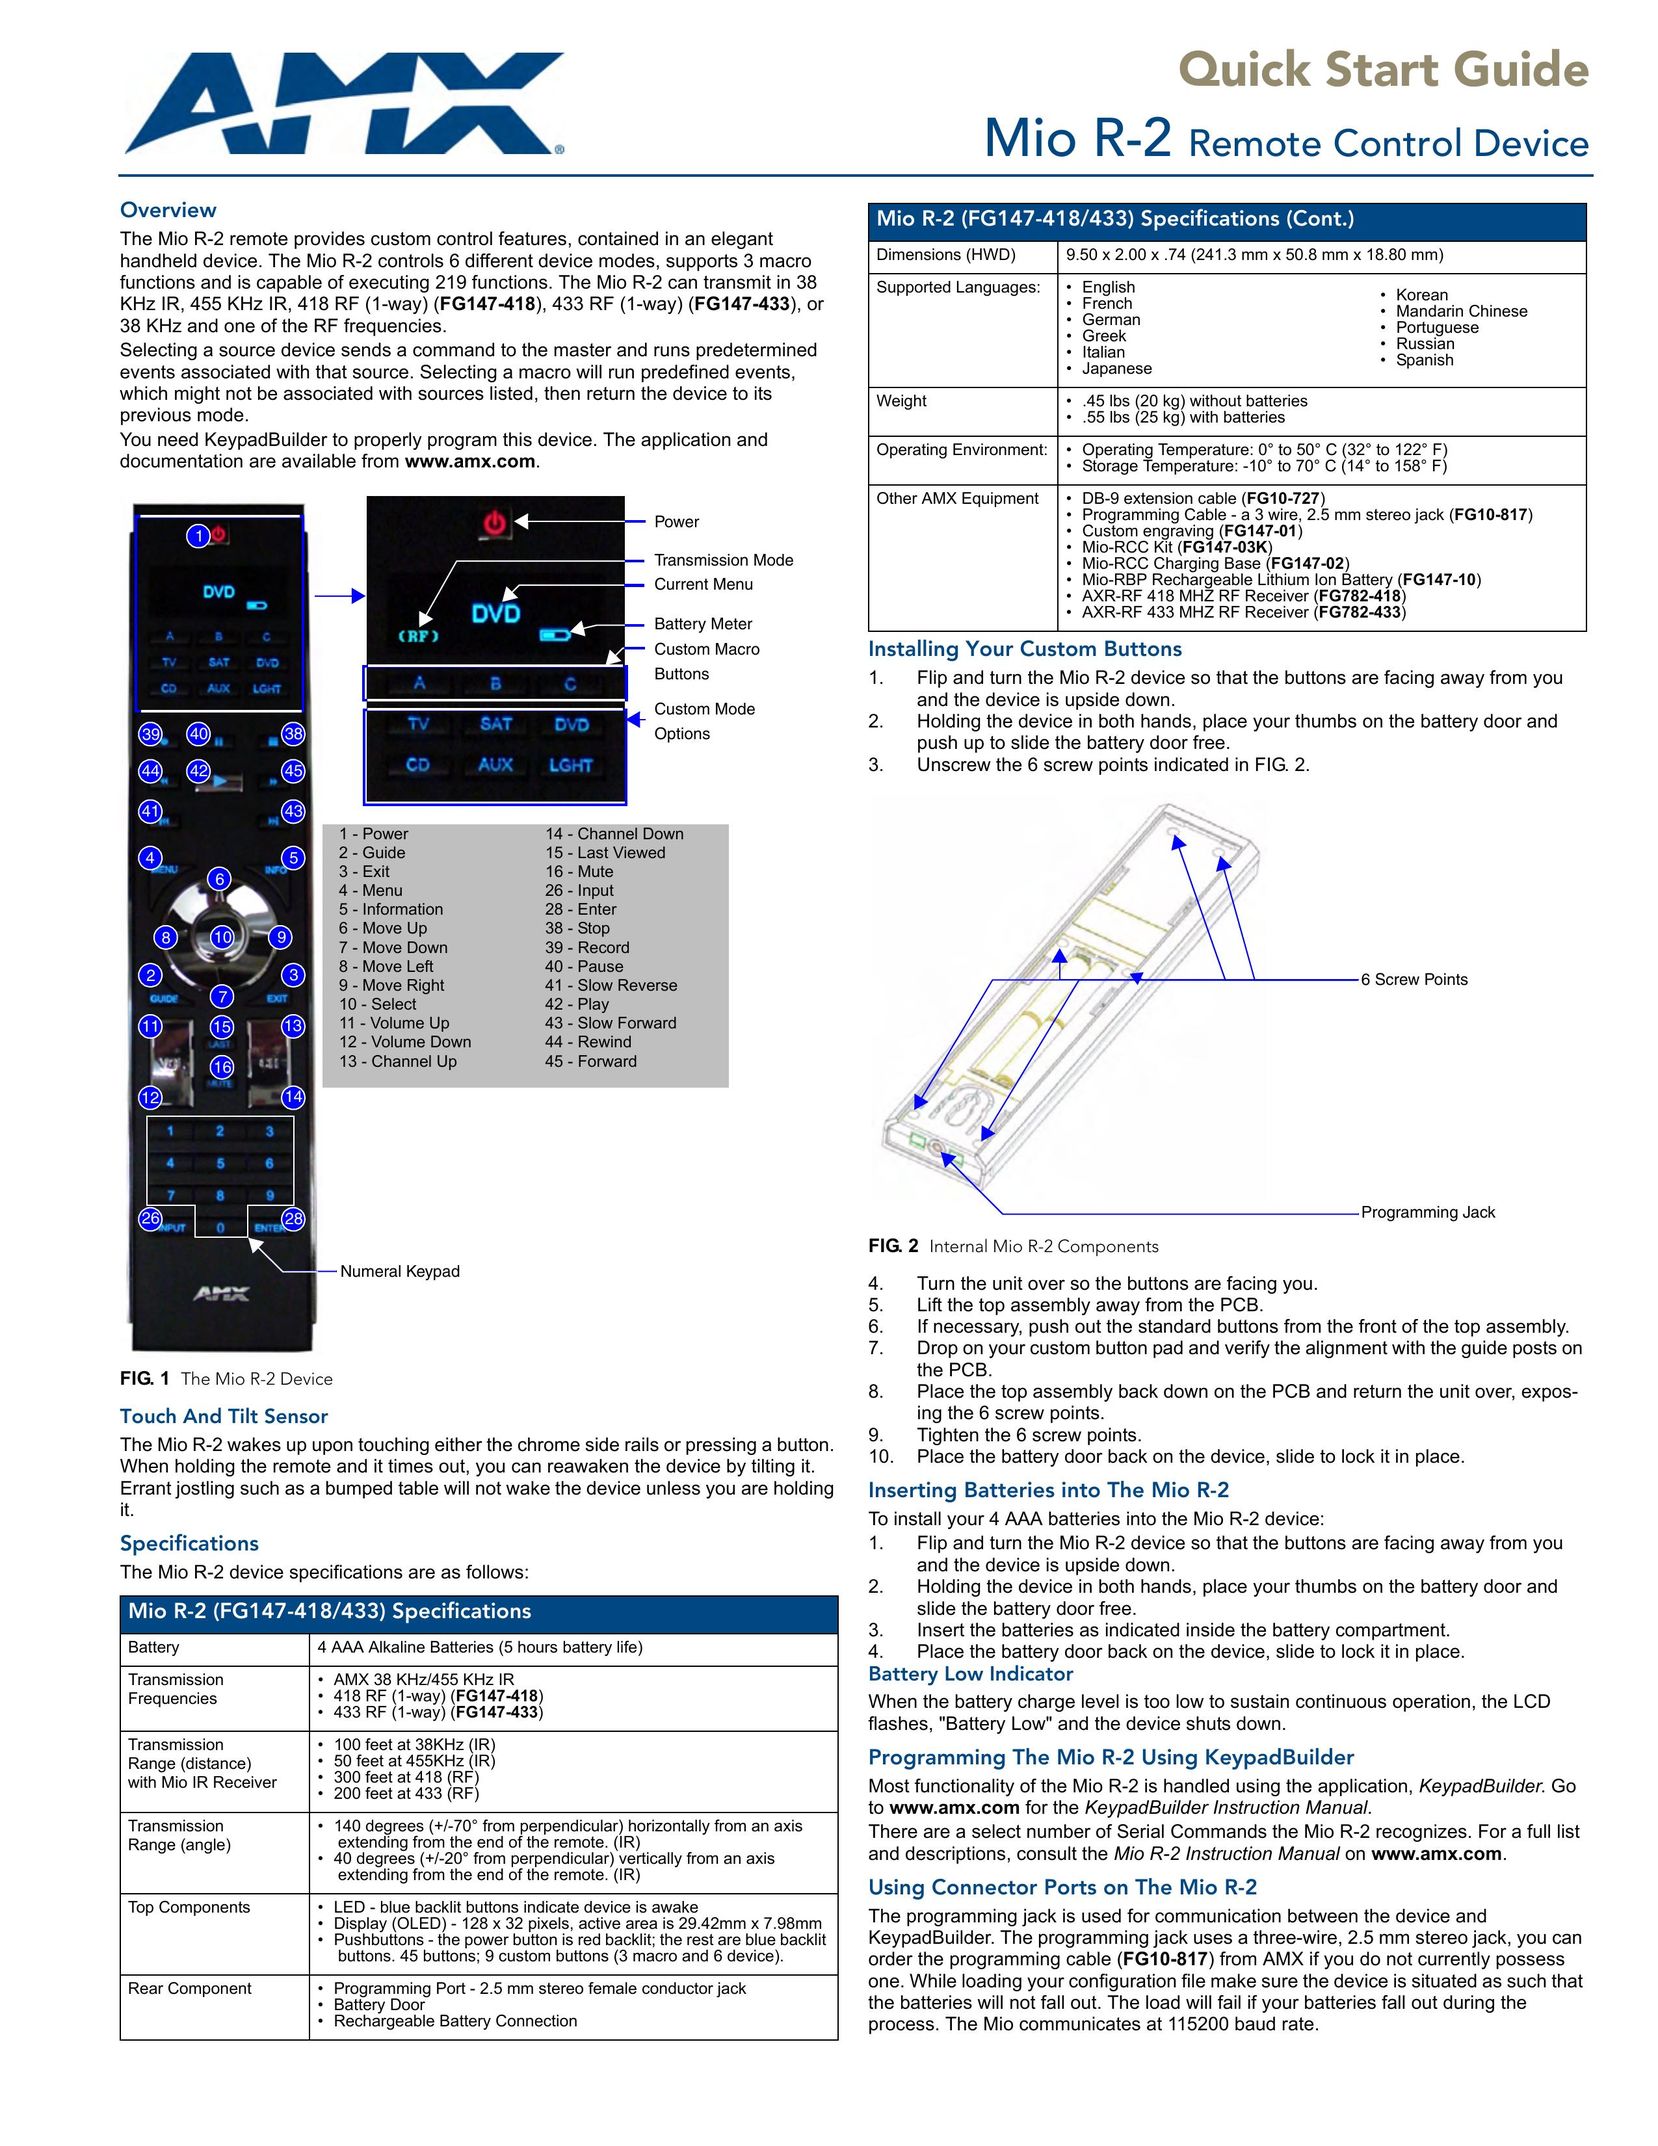 AMX Mio R-2 Universal Remote User Manual